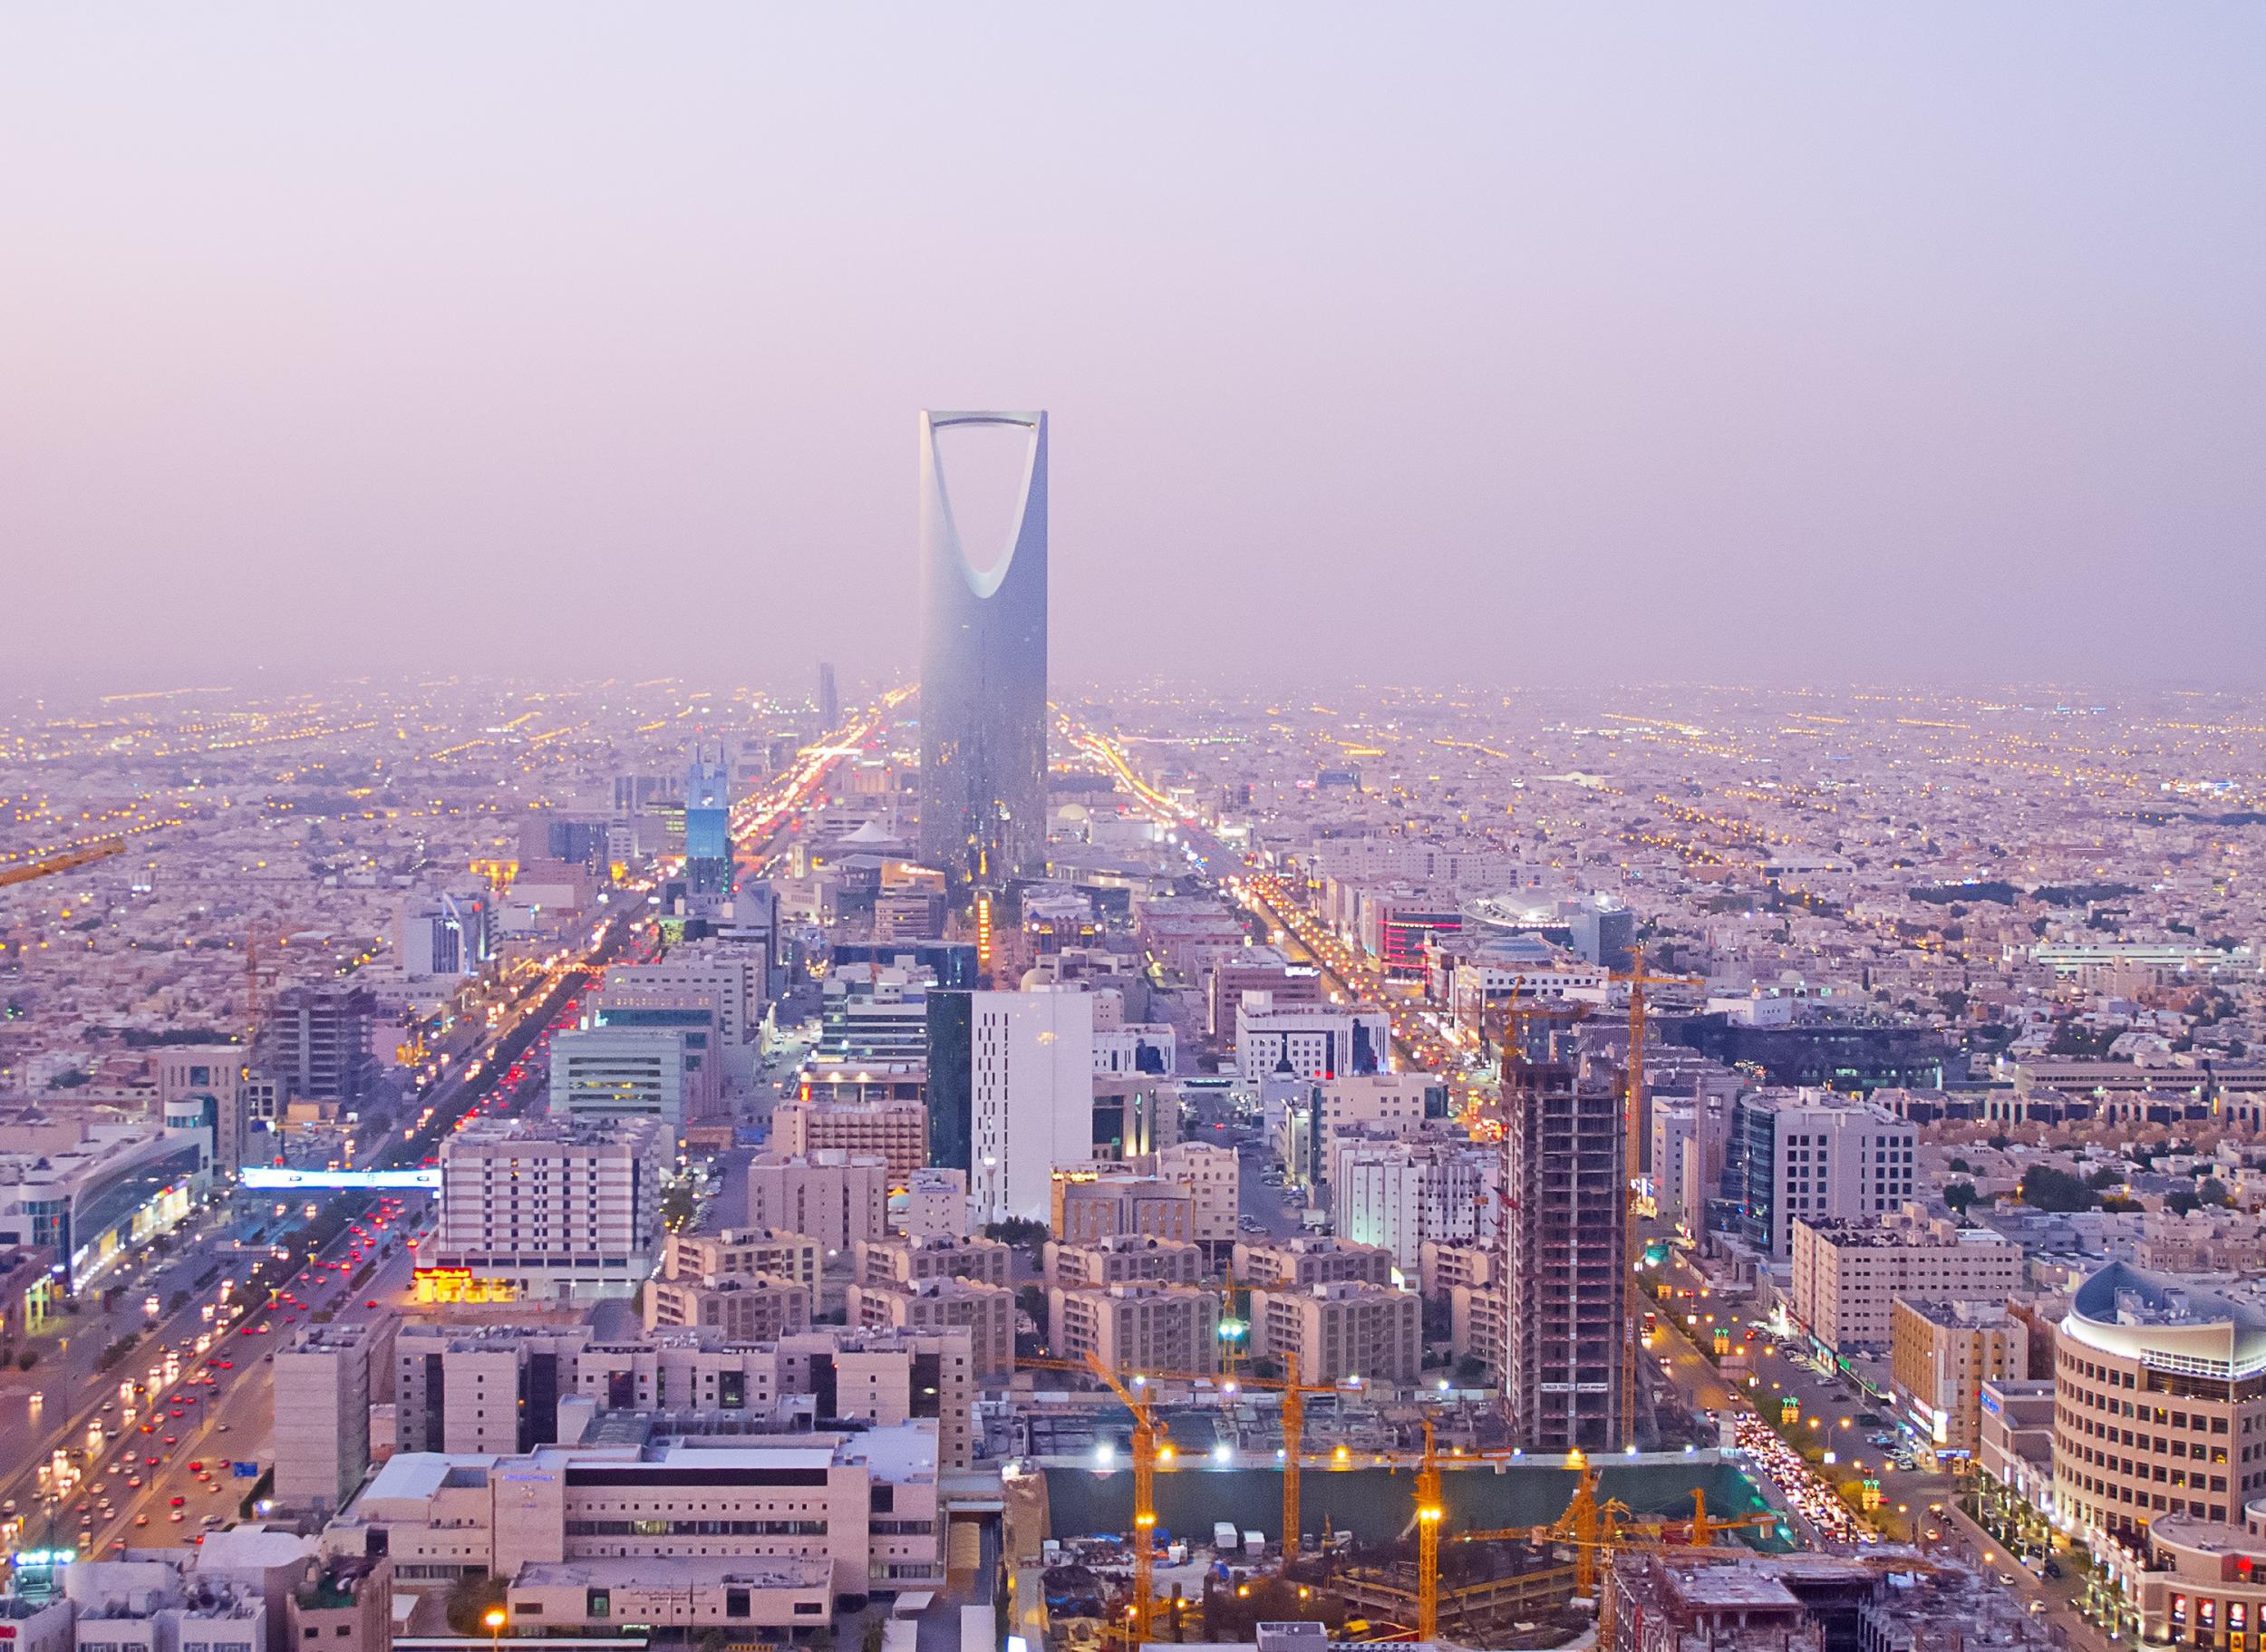 The Riyadh skyline – soon to be another tourist hotspot?